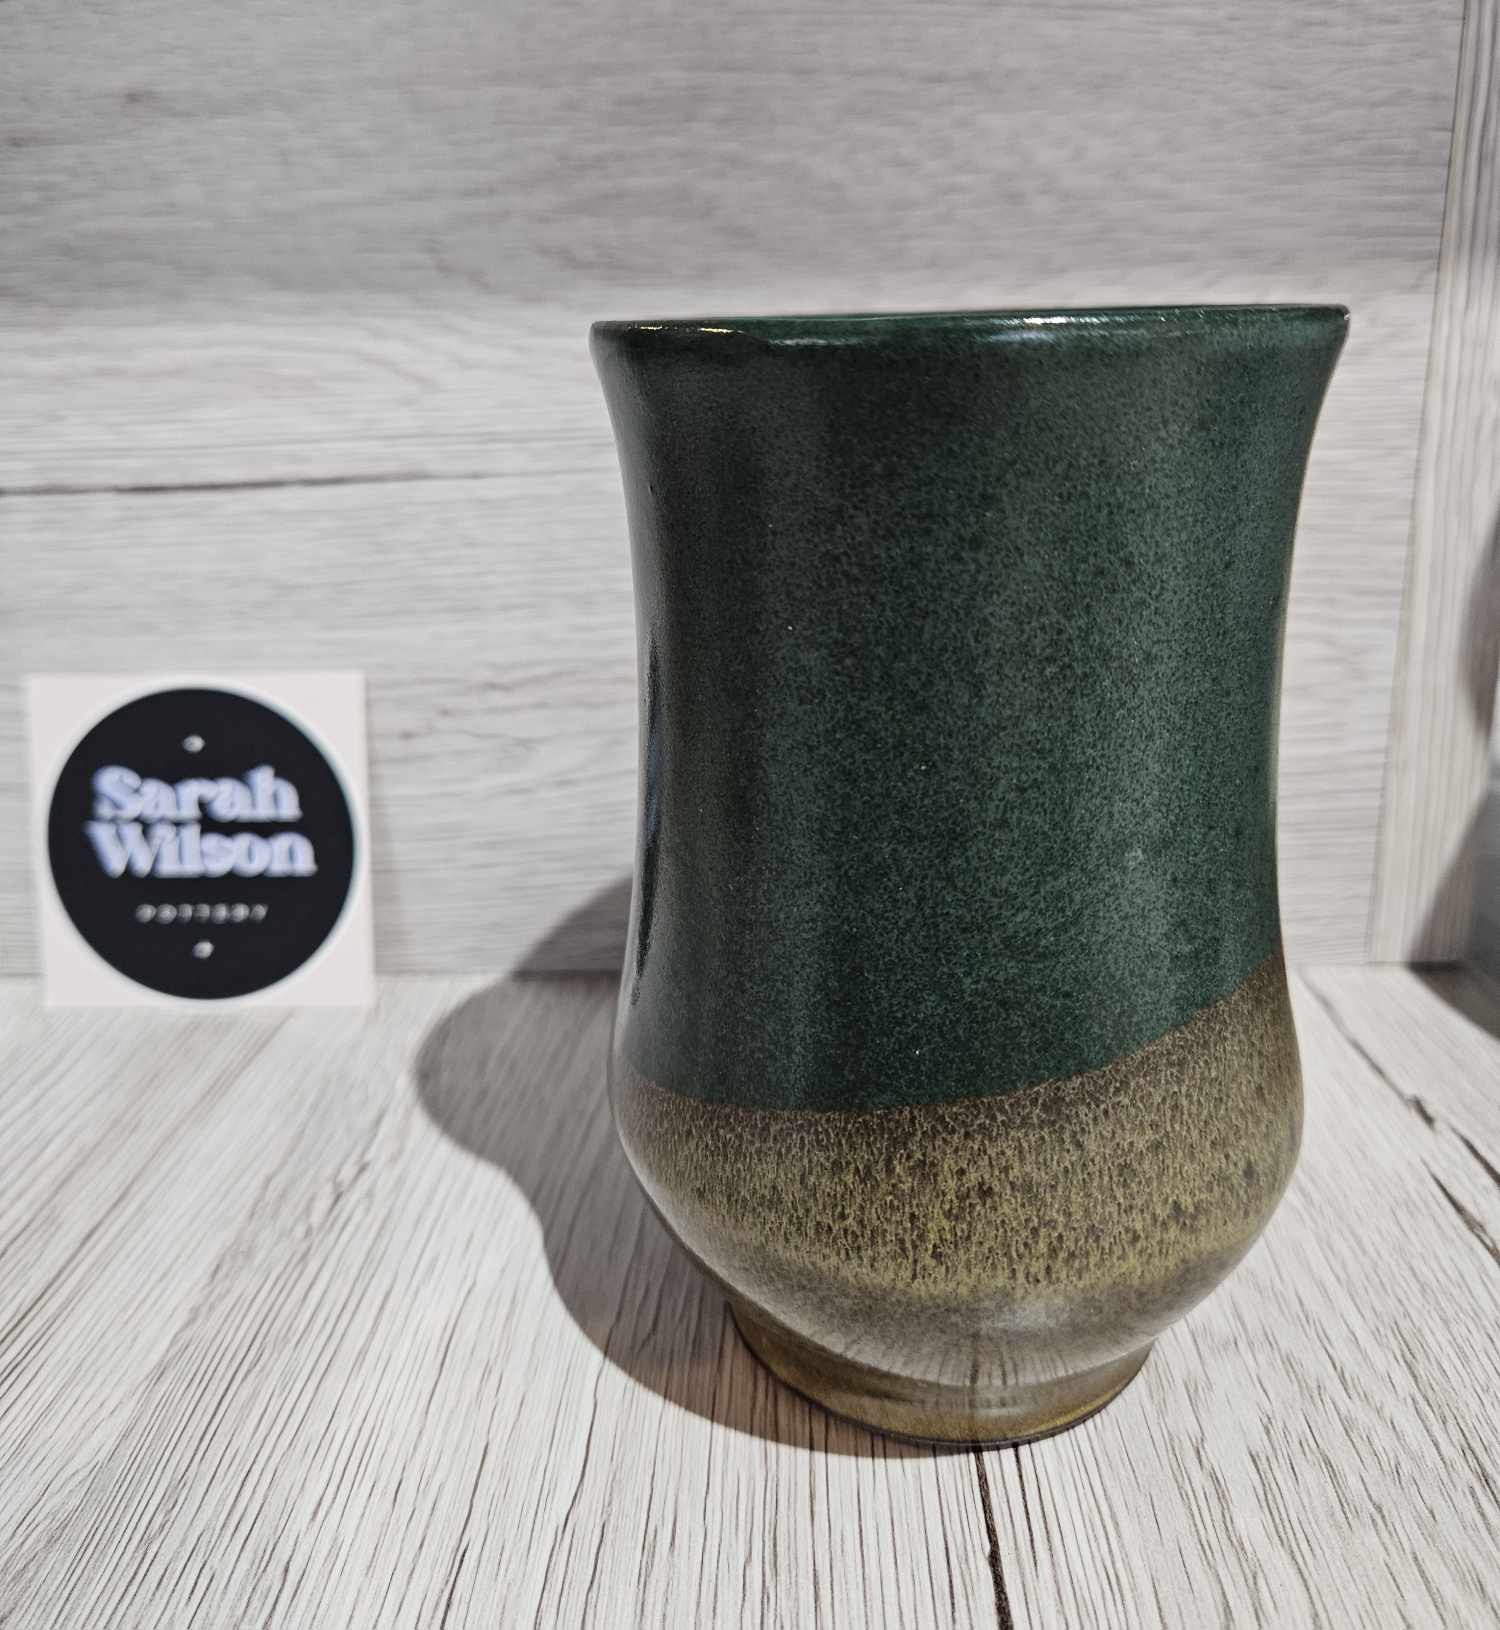 tumbler mug pottery british columbia sarah wilson